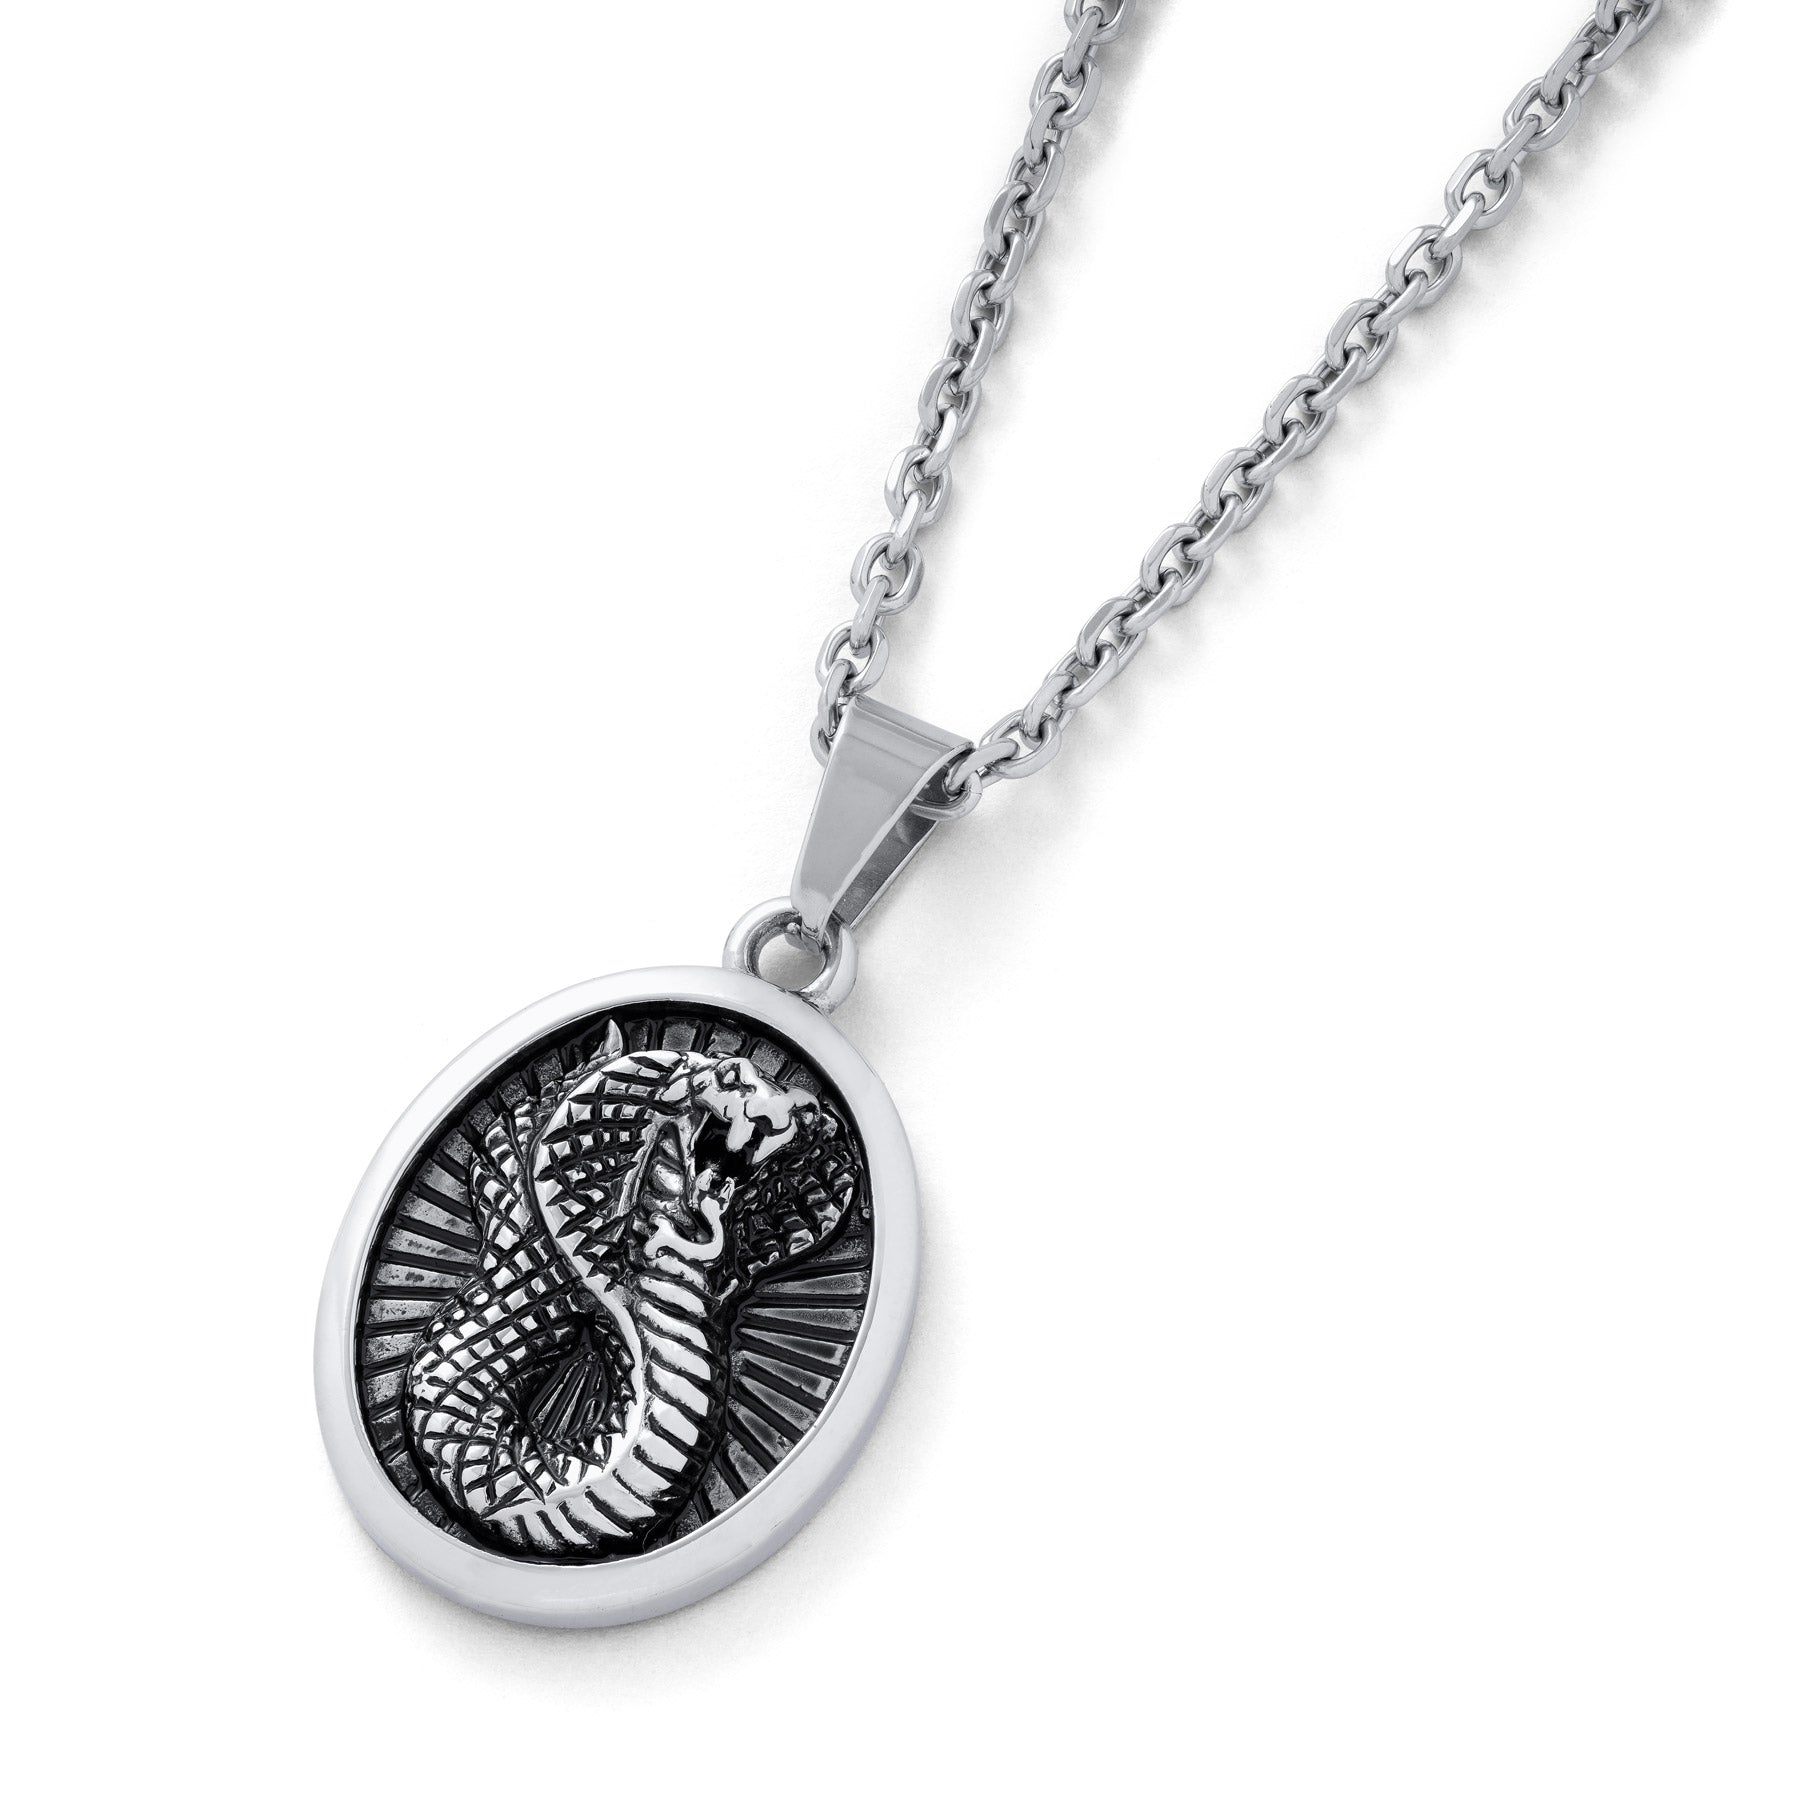 Snake talisman charm pendant for men